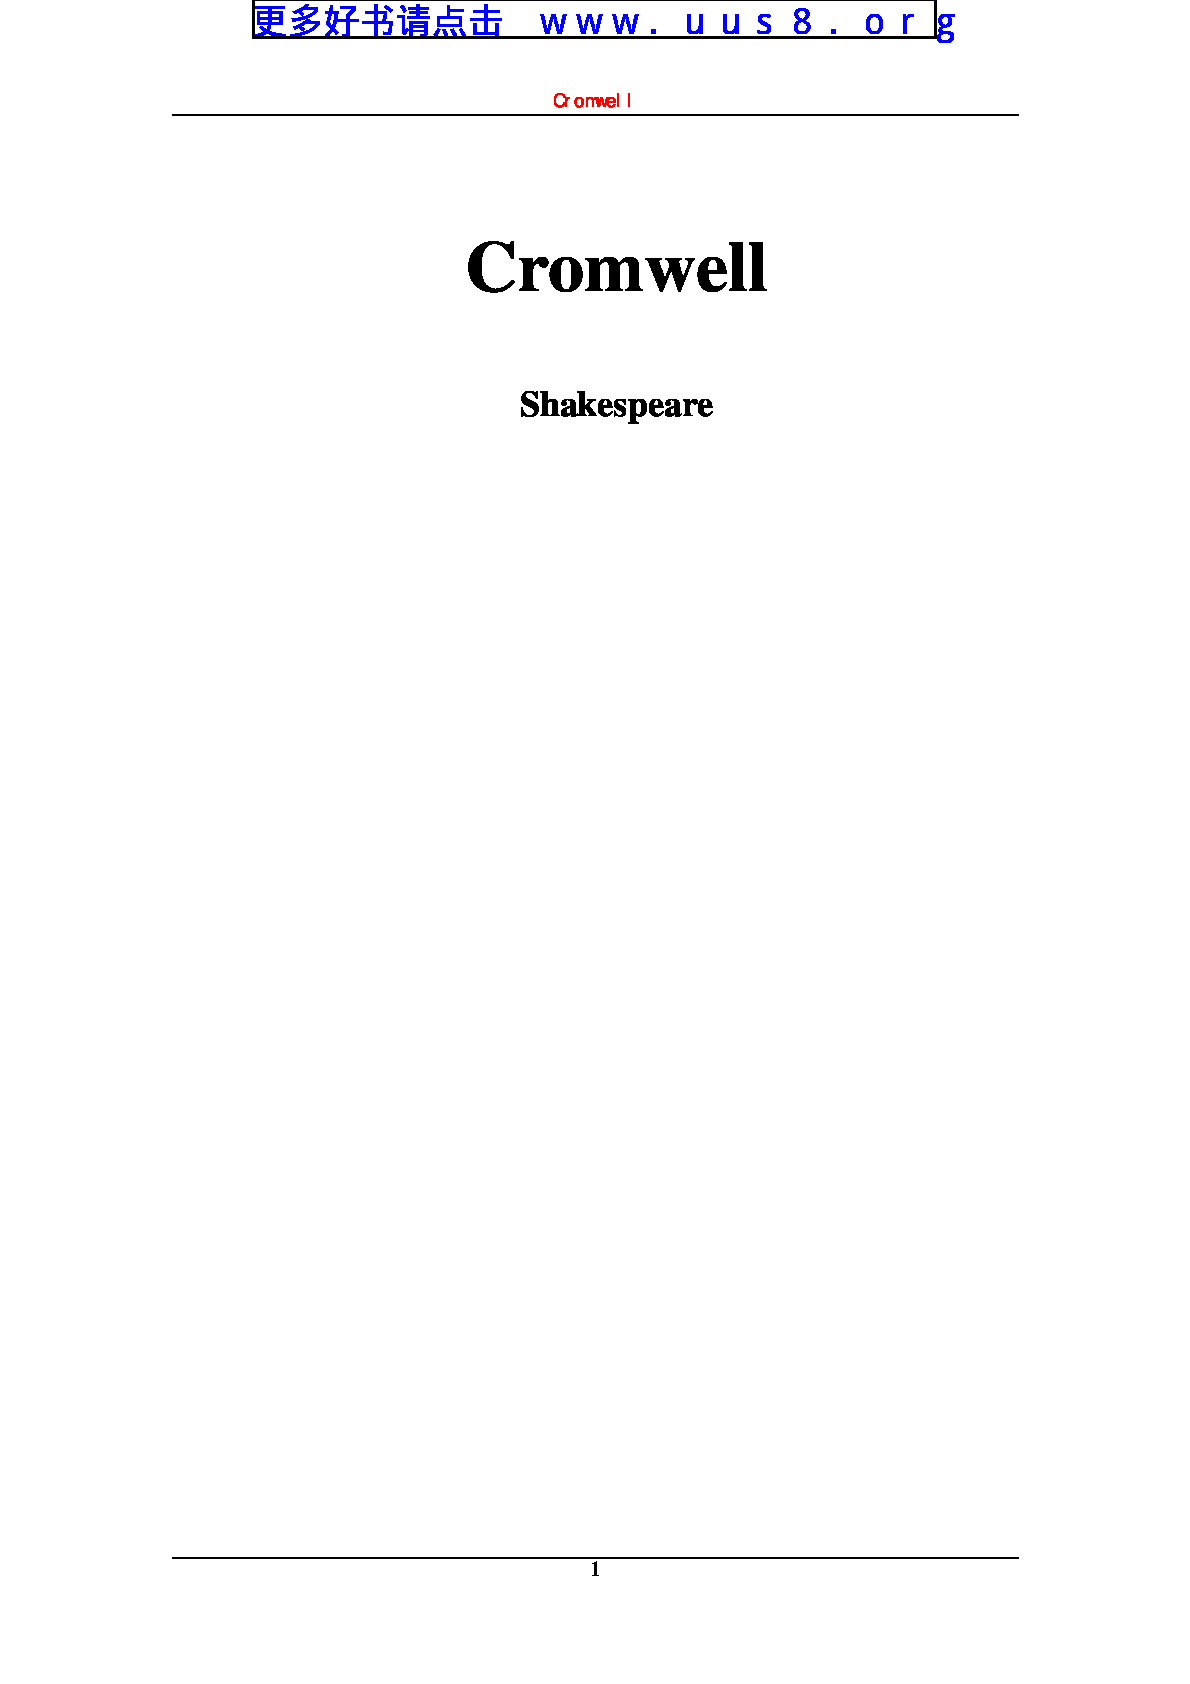 Cromwell(克伦威尔)